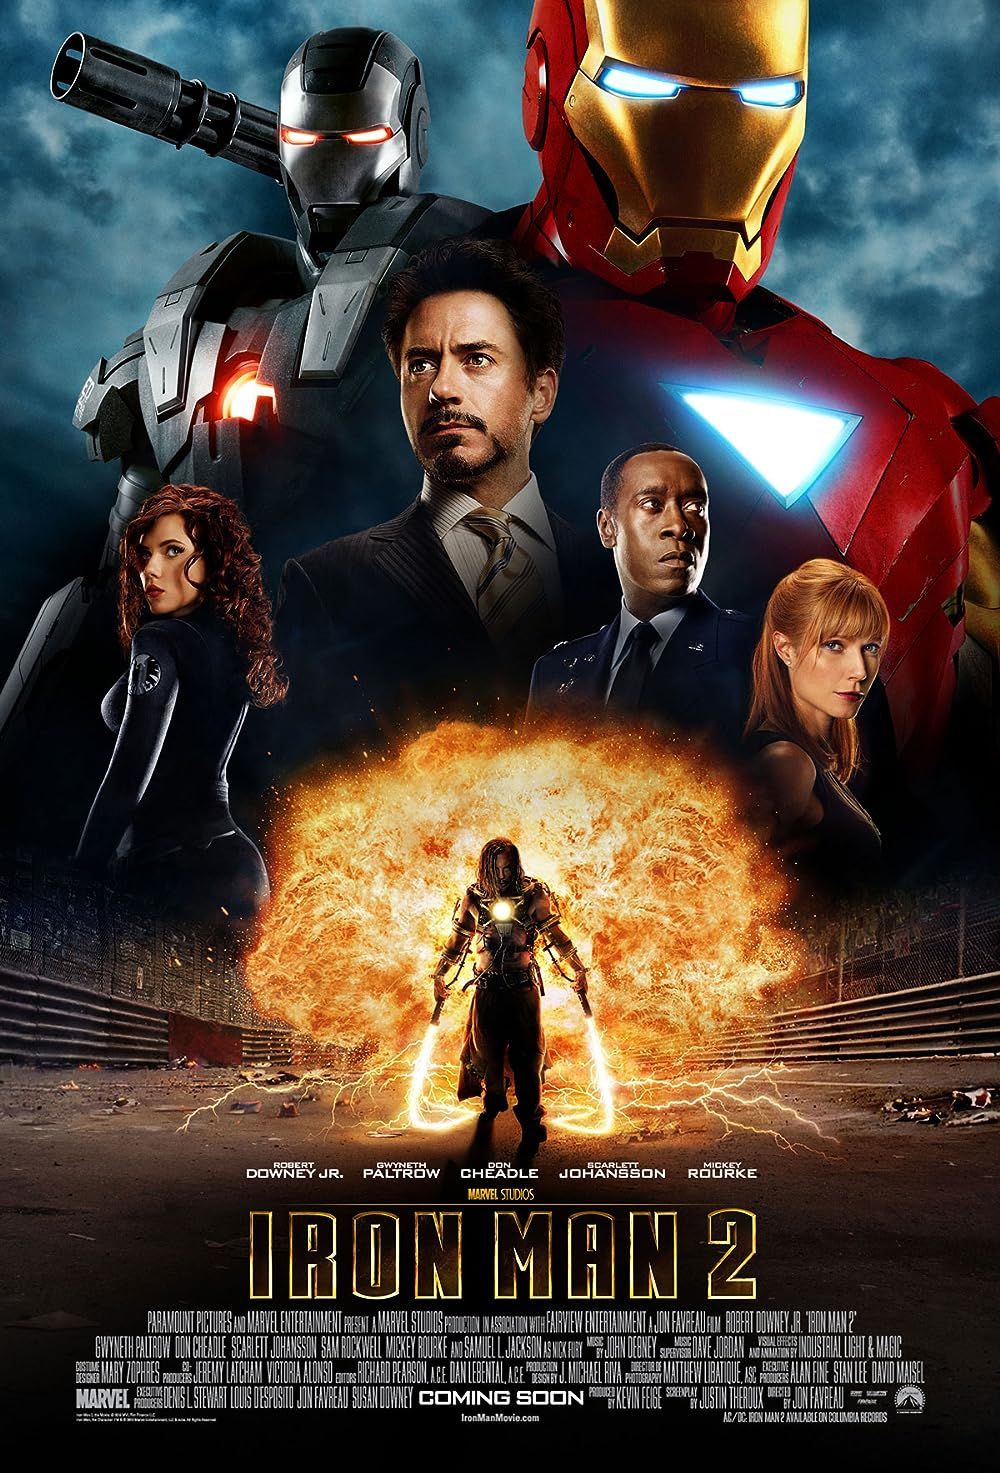 The Cast of Iron Man 2